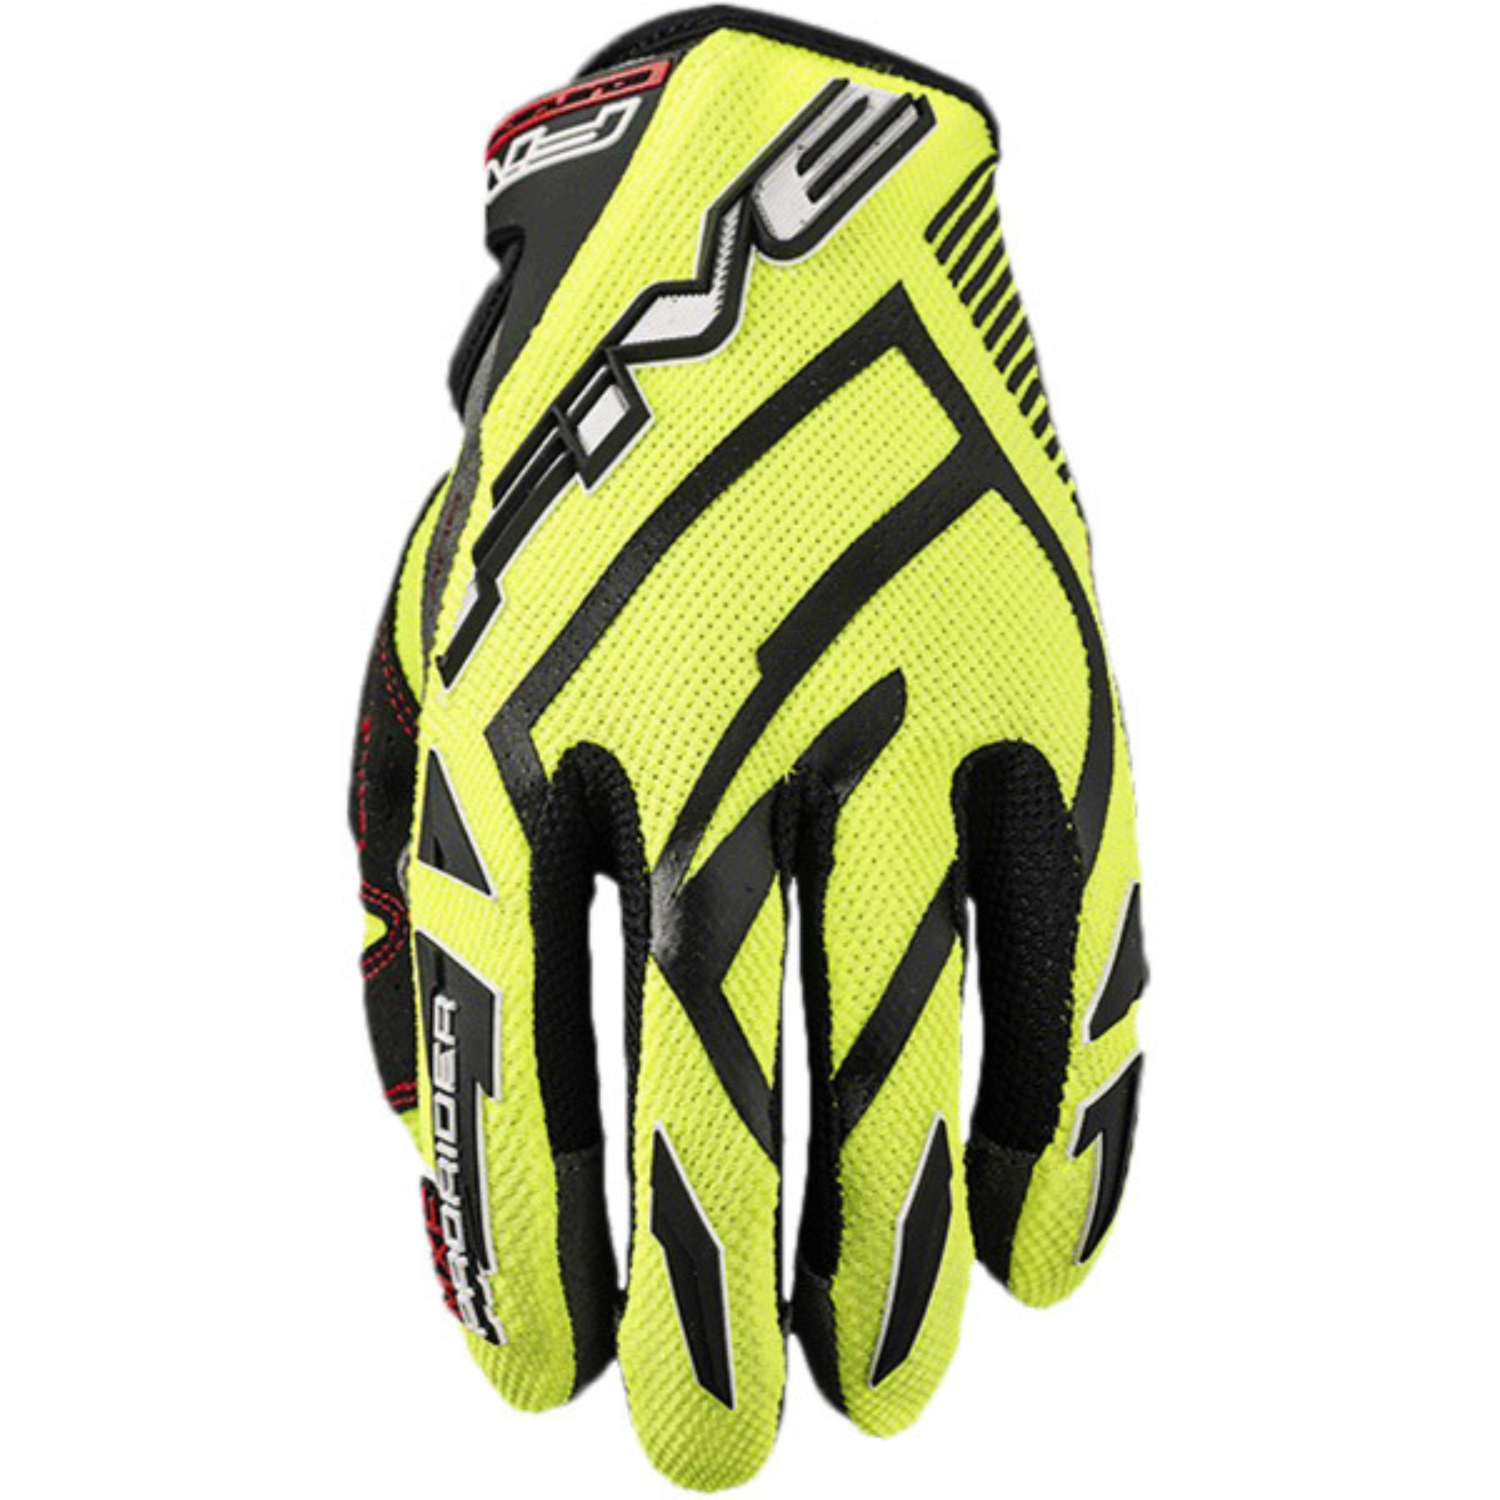 Image of Five MXF Prorider S Gloves Black Yellow Größe S